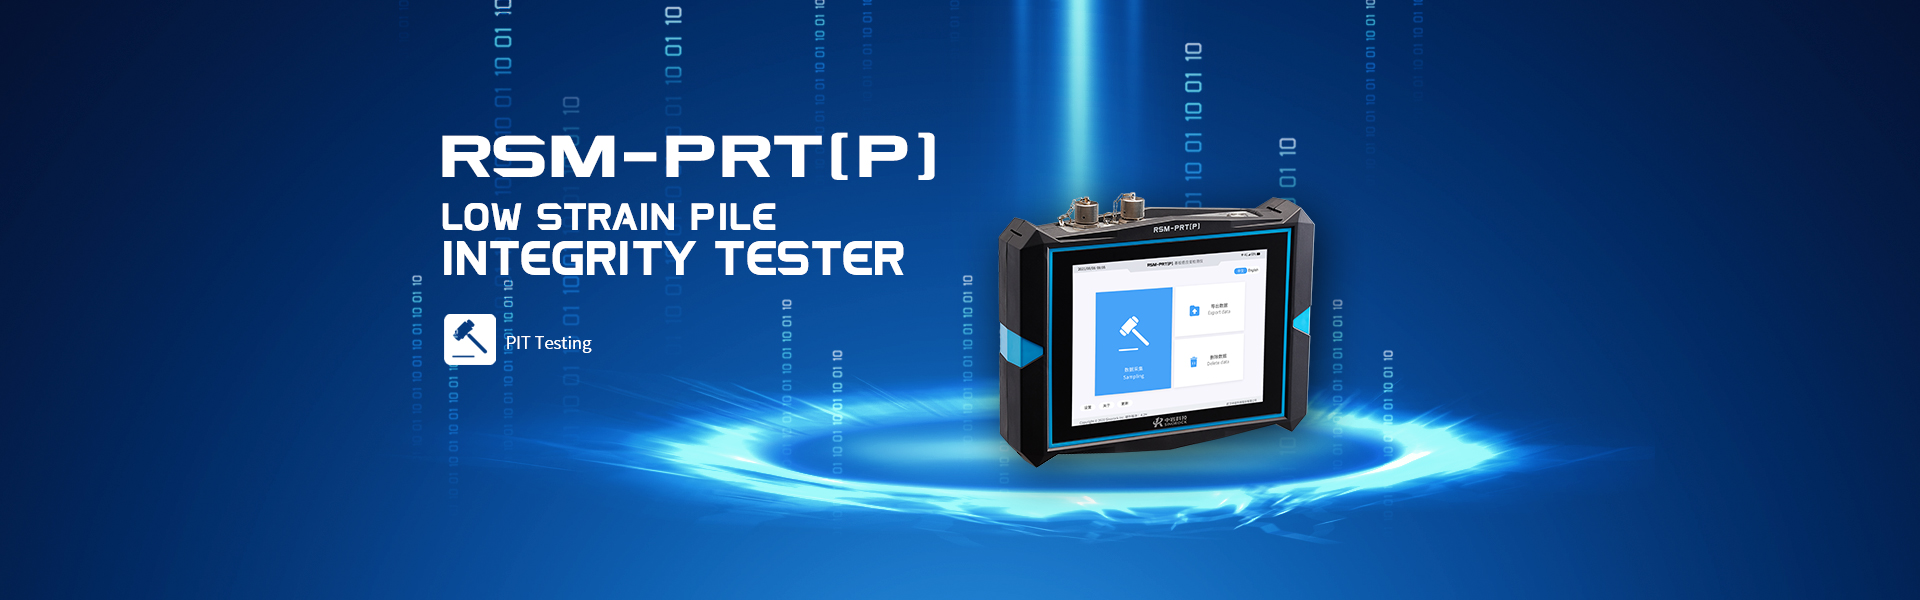 RSM-PRT(P) Low Strain Pile Integrity Tester